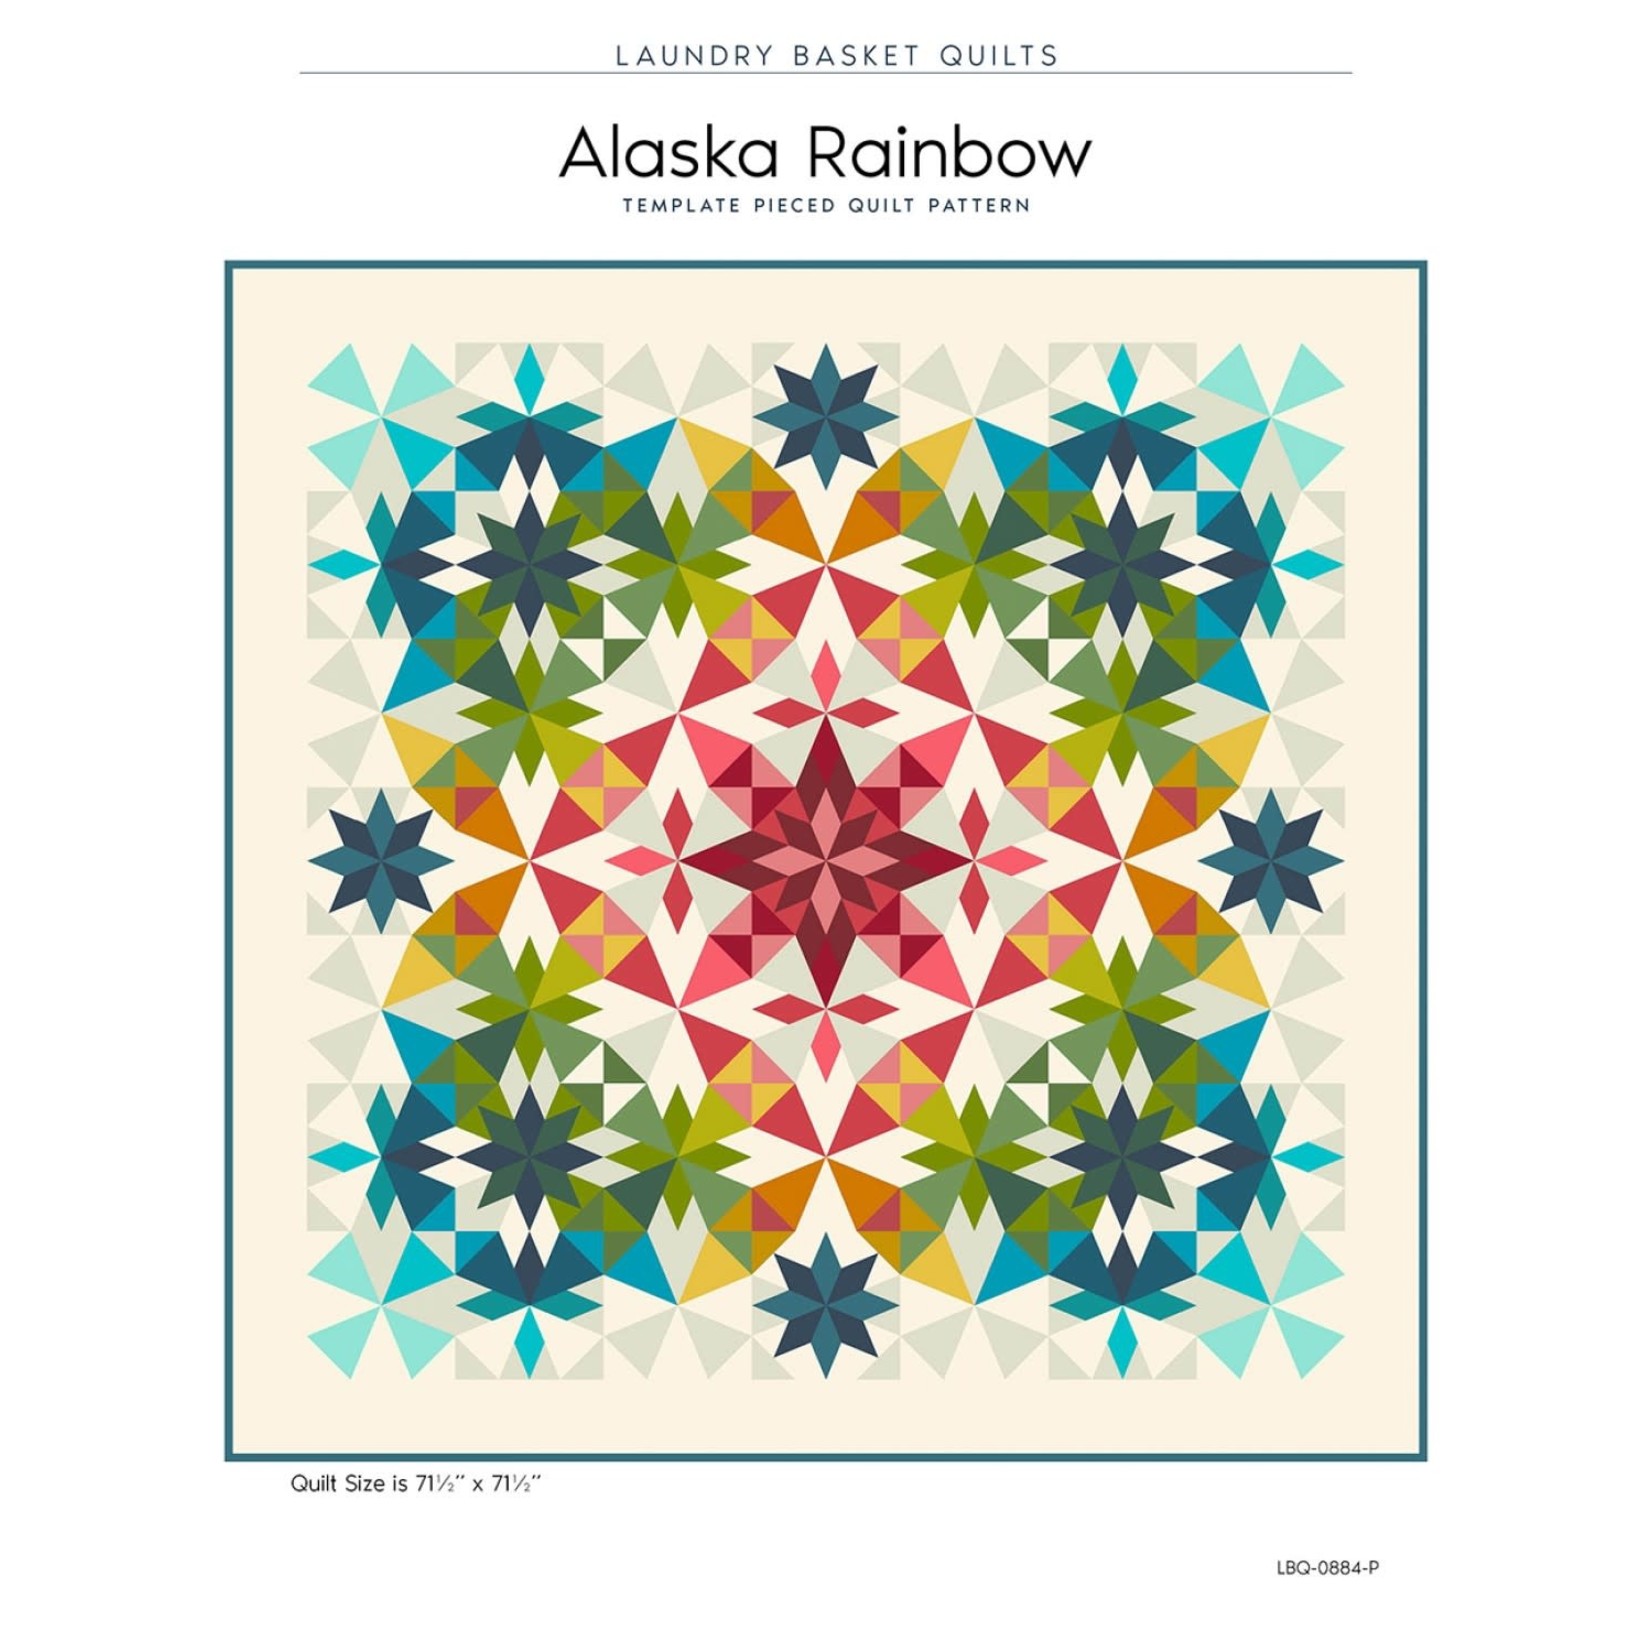 Laundry Basket Quilts Alaska Rainbow Pattern